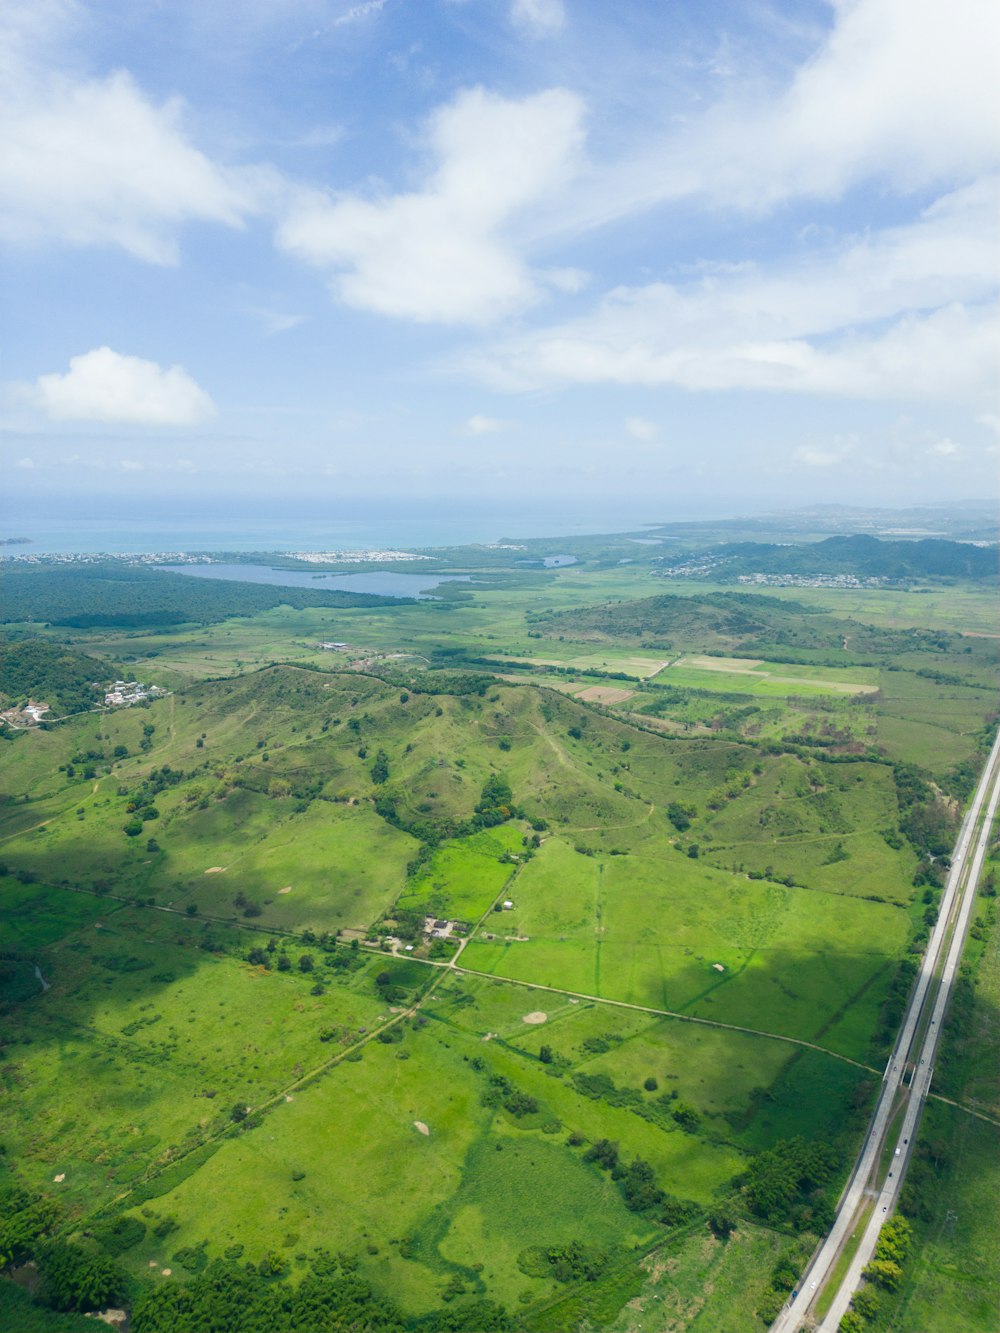 Una veduta aerea di un'autostrada che attraversa una campagna verde lussureggiante